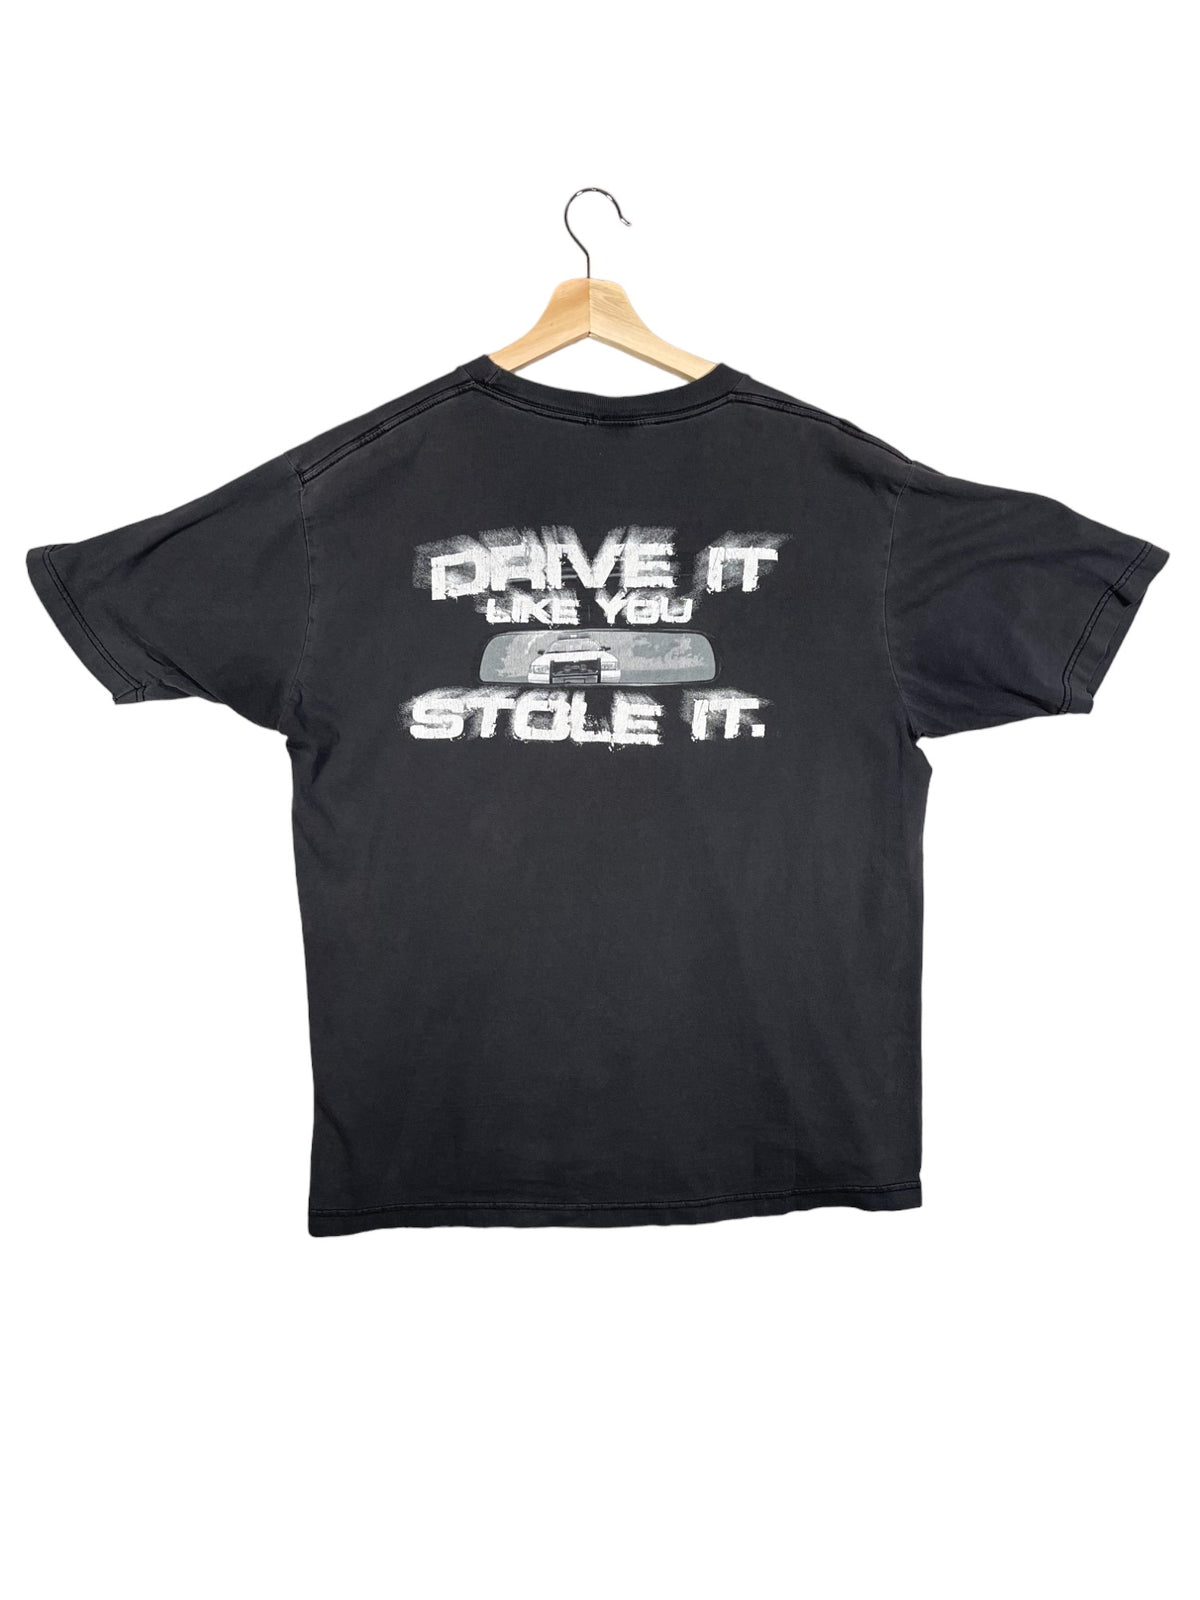 Vintage 1990's No Fear "Drive It Like You Stole It" T-Shirt